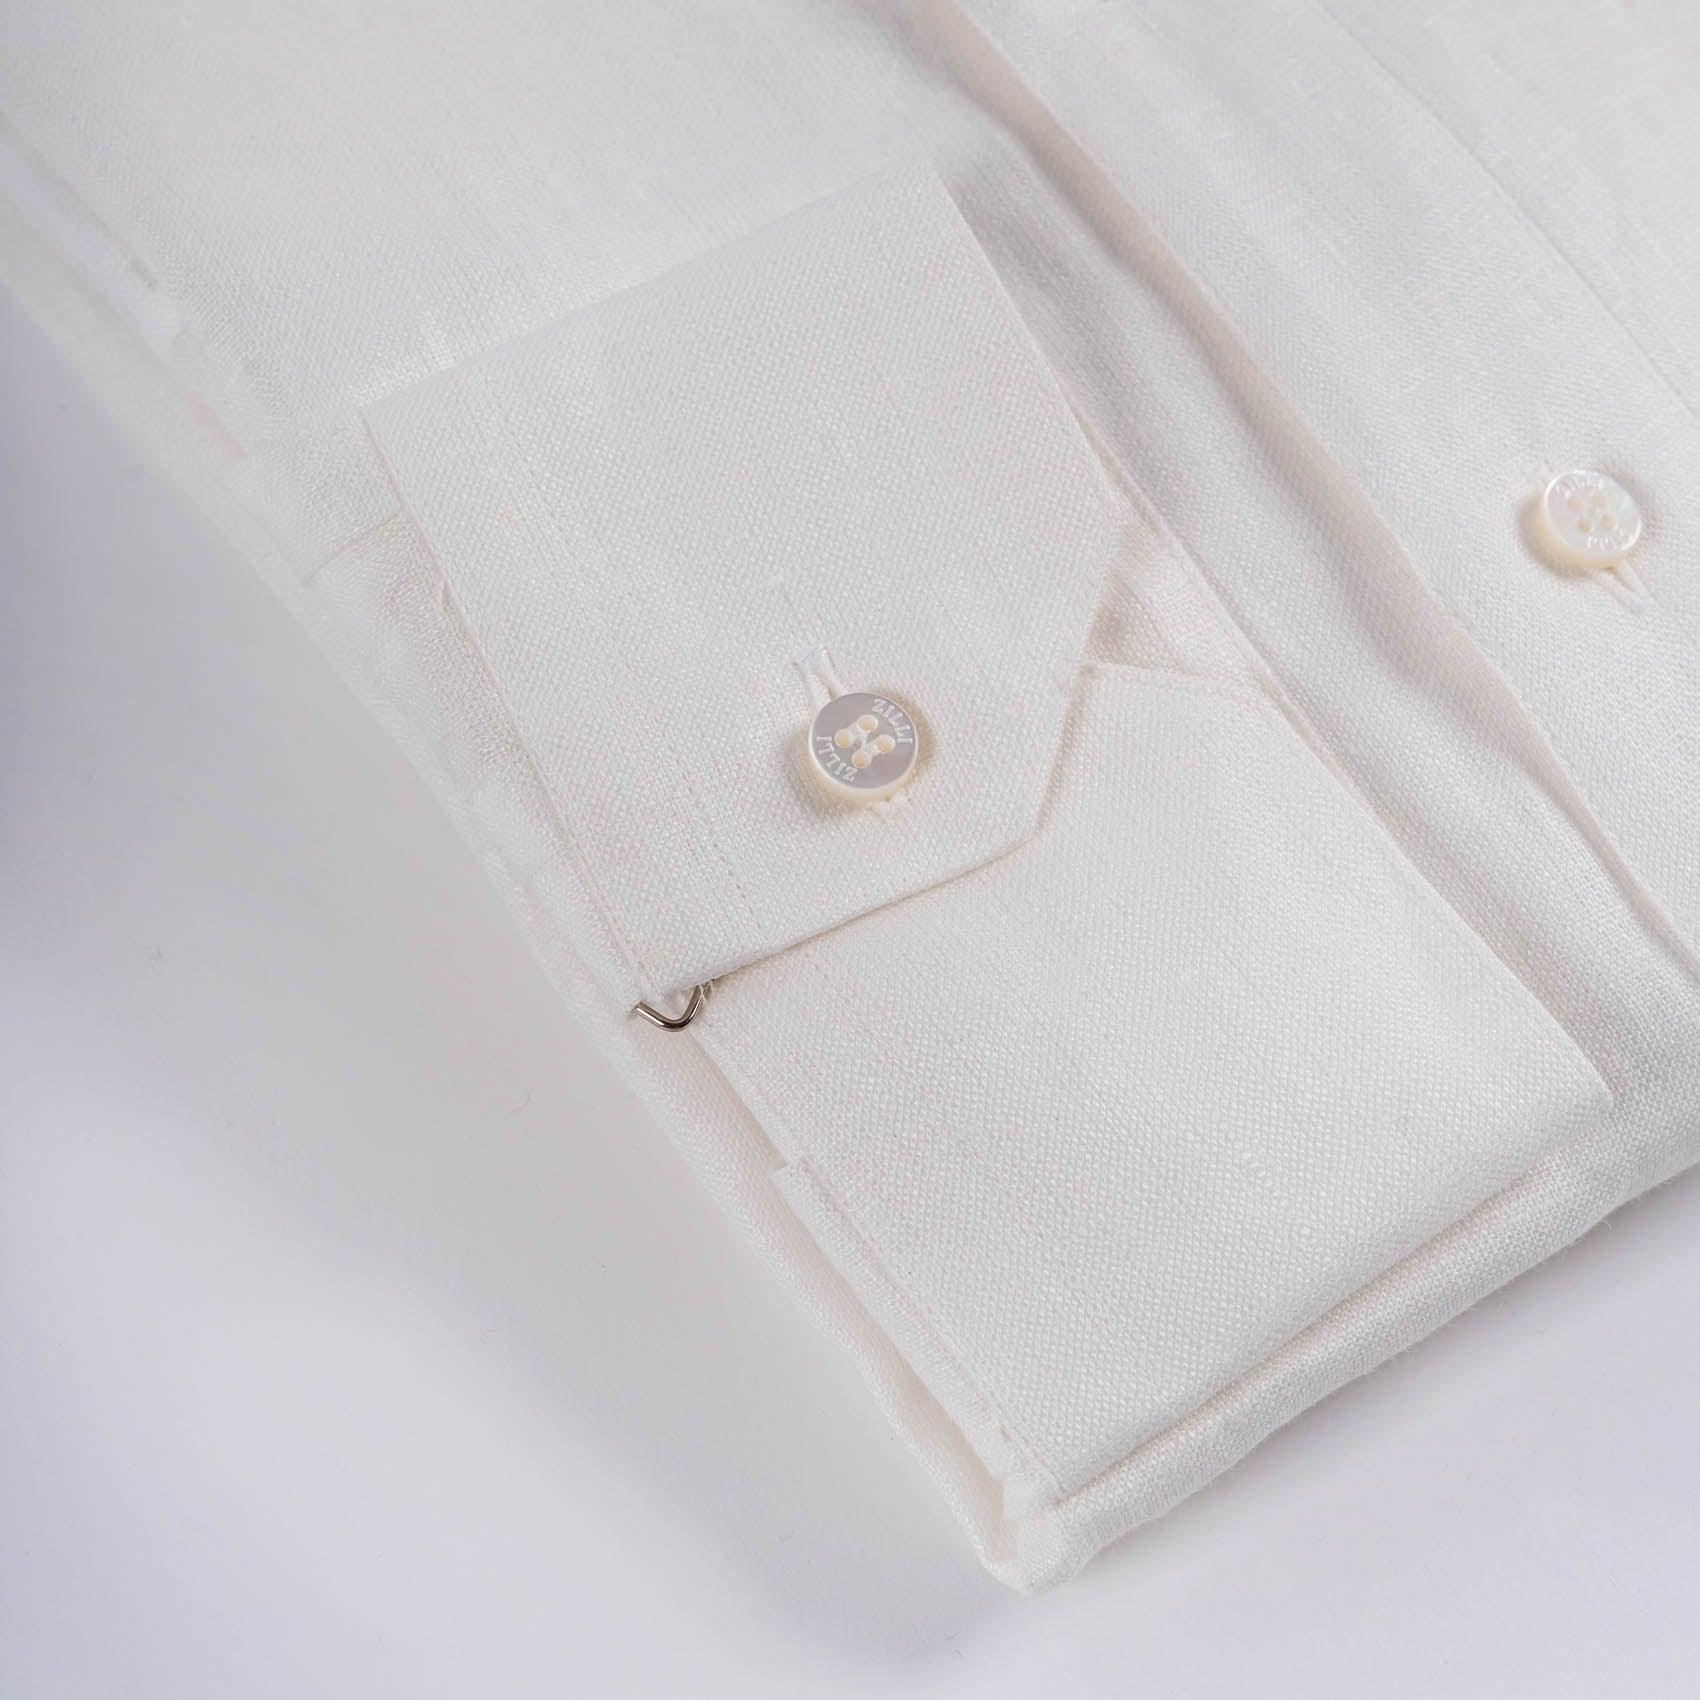 Shirt casual linen with a logo - ZILLI